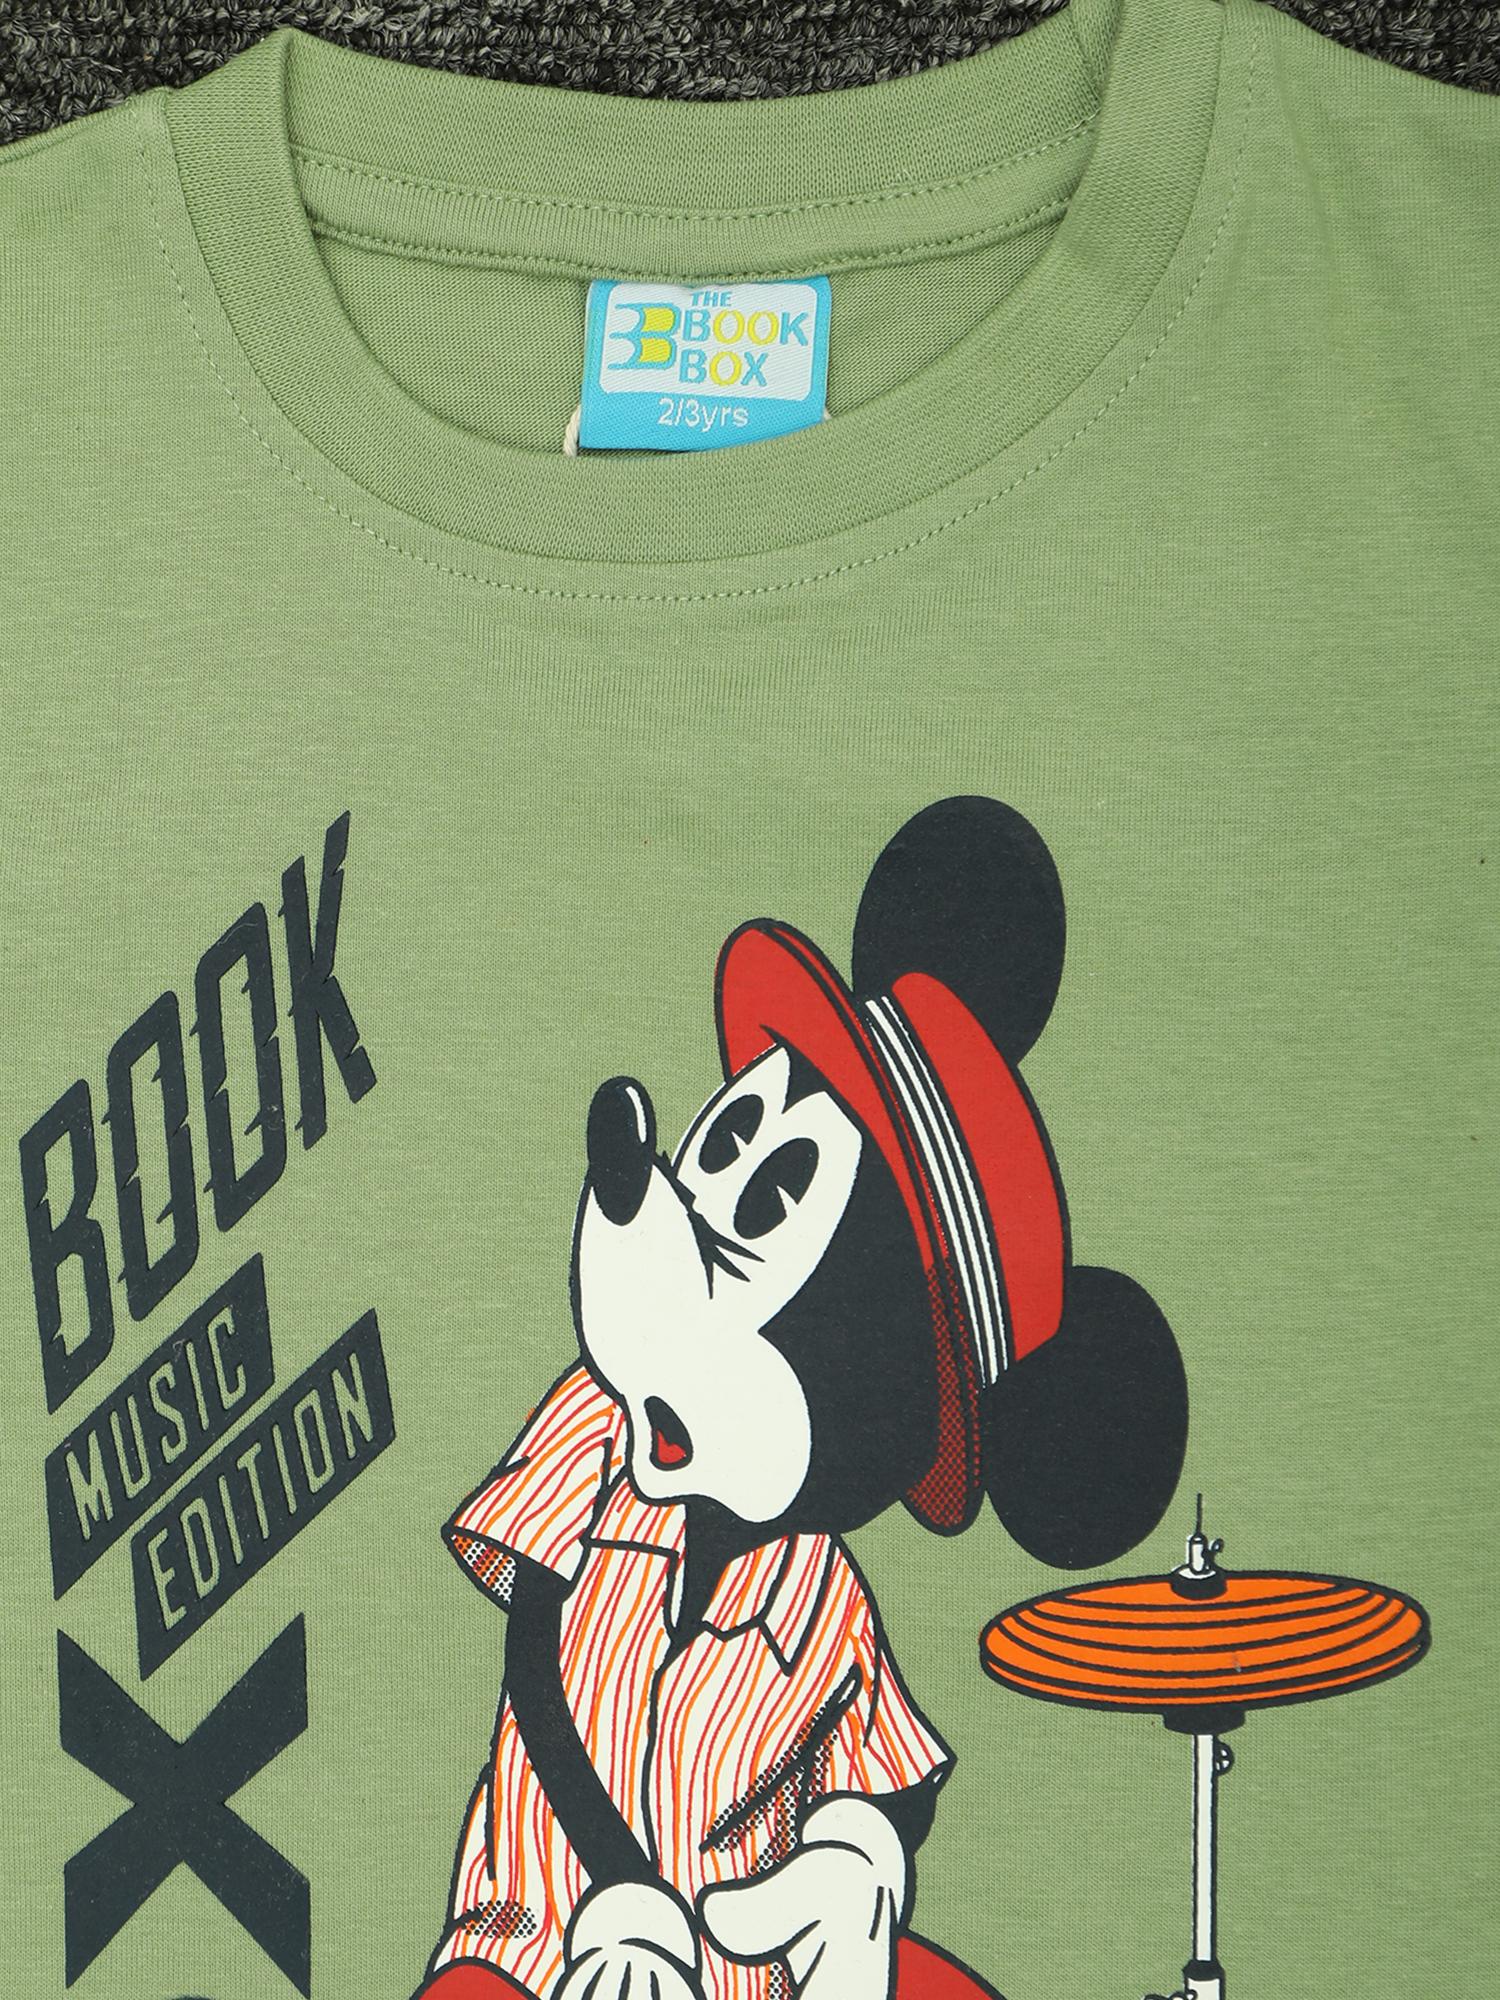 BYOStyle Boys Cotton Tshirt Printed-Green